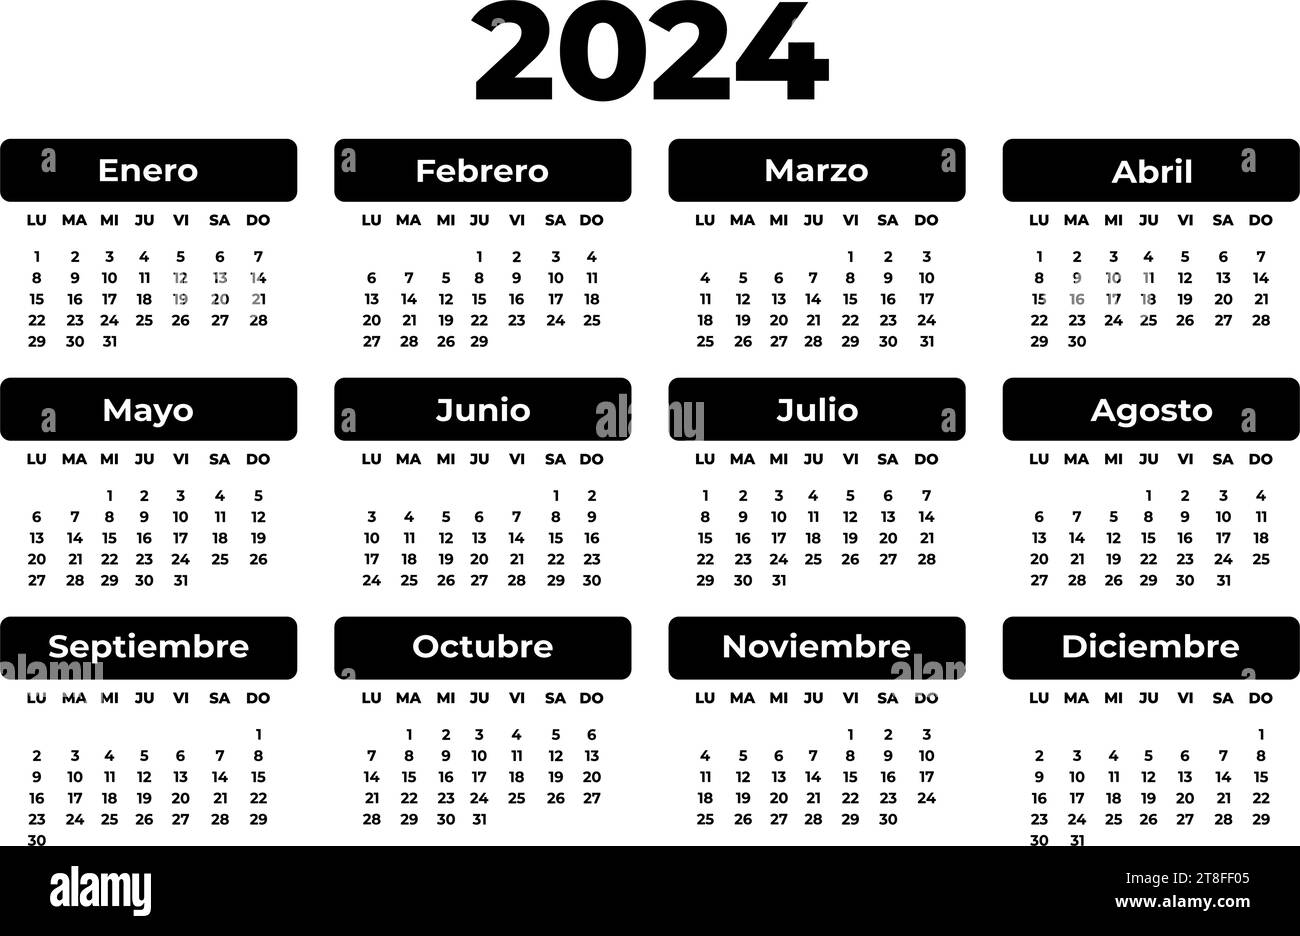 Calendario 2024 En Espanol Images - Free Download on Freepik